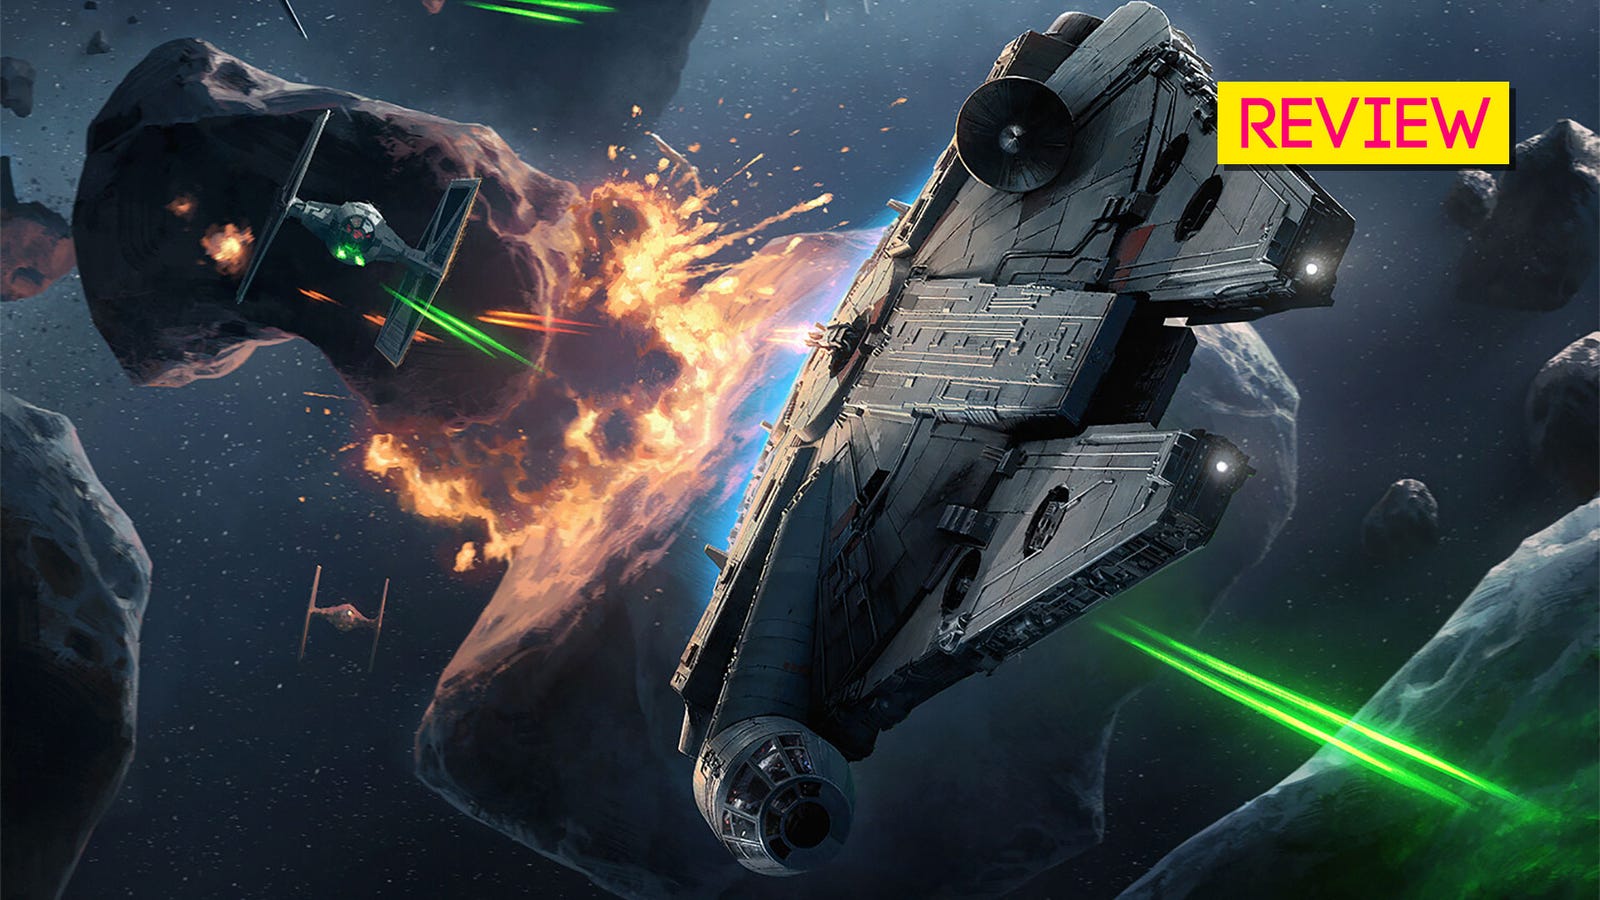 Star Wars: Outer Rim: The Kotaku Review